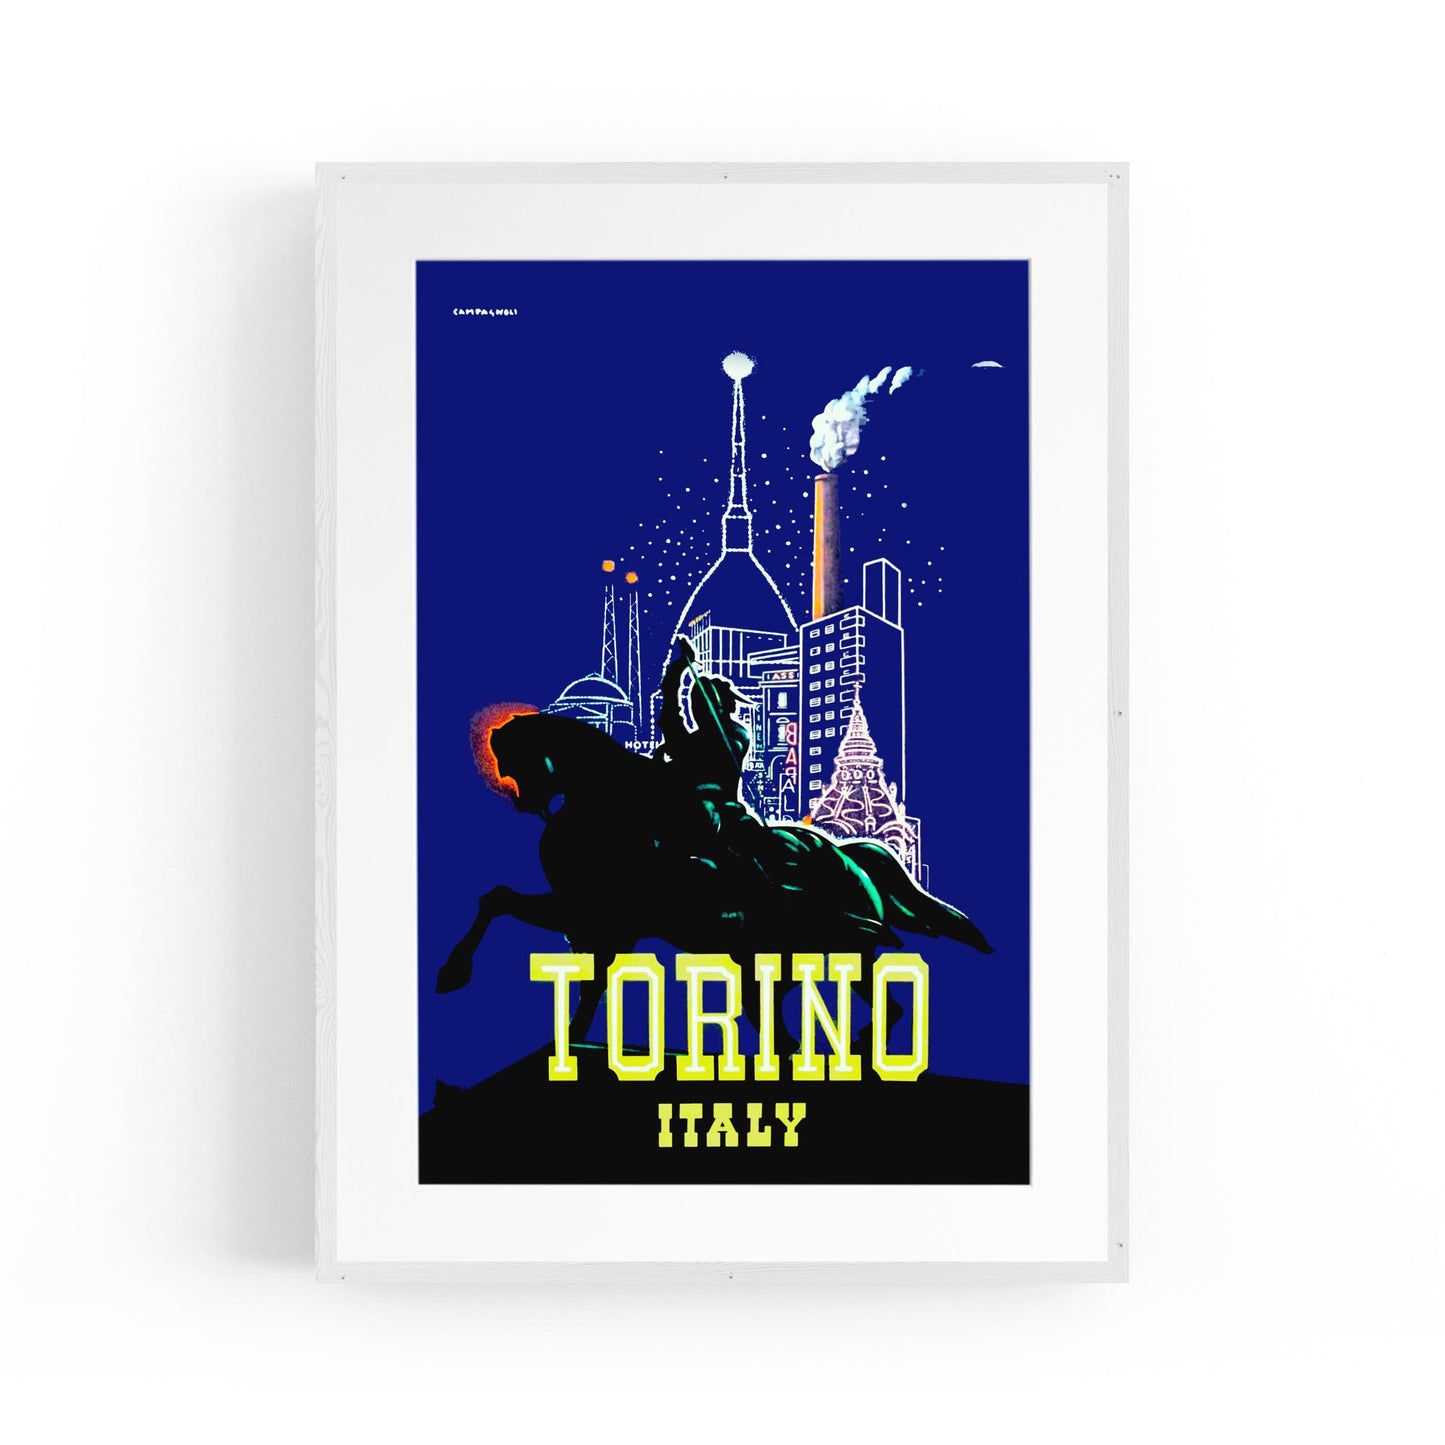 Torino, Italy by Adalberto Campagnoli | Framed Vintage Travel Poster